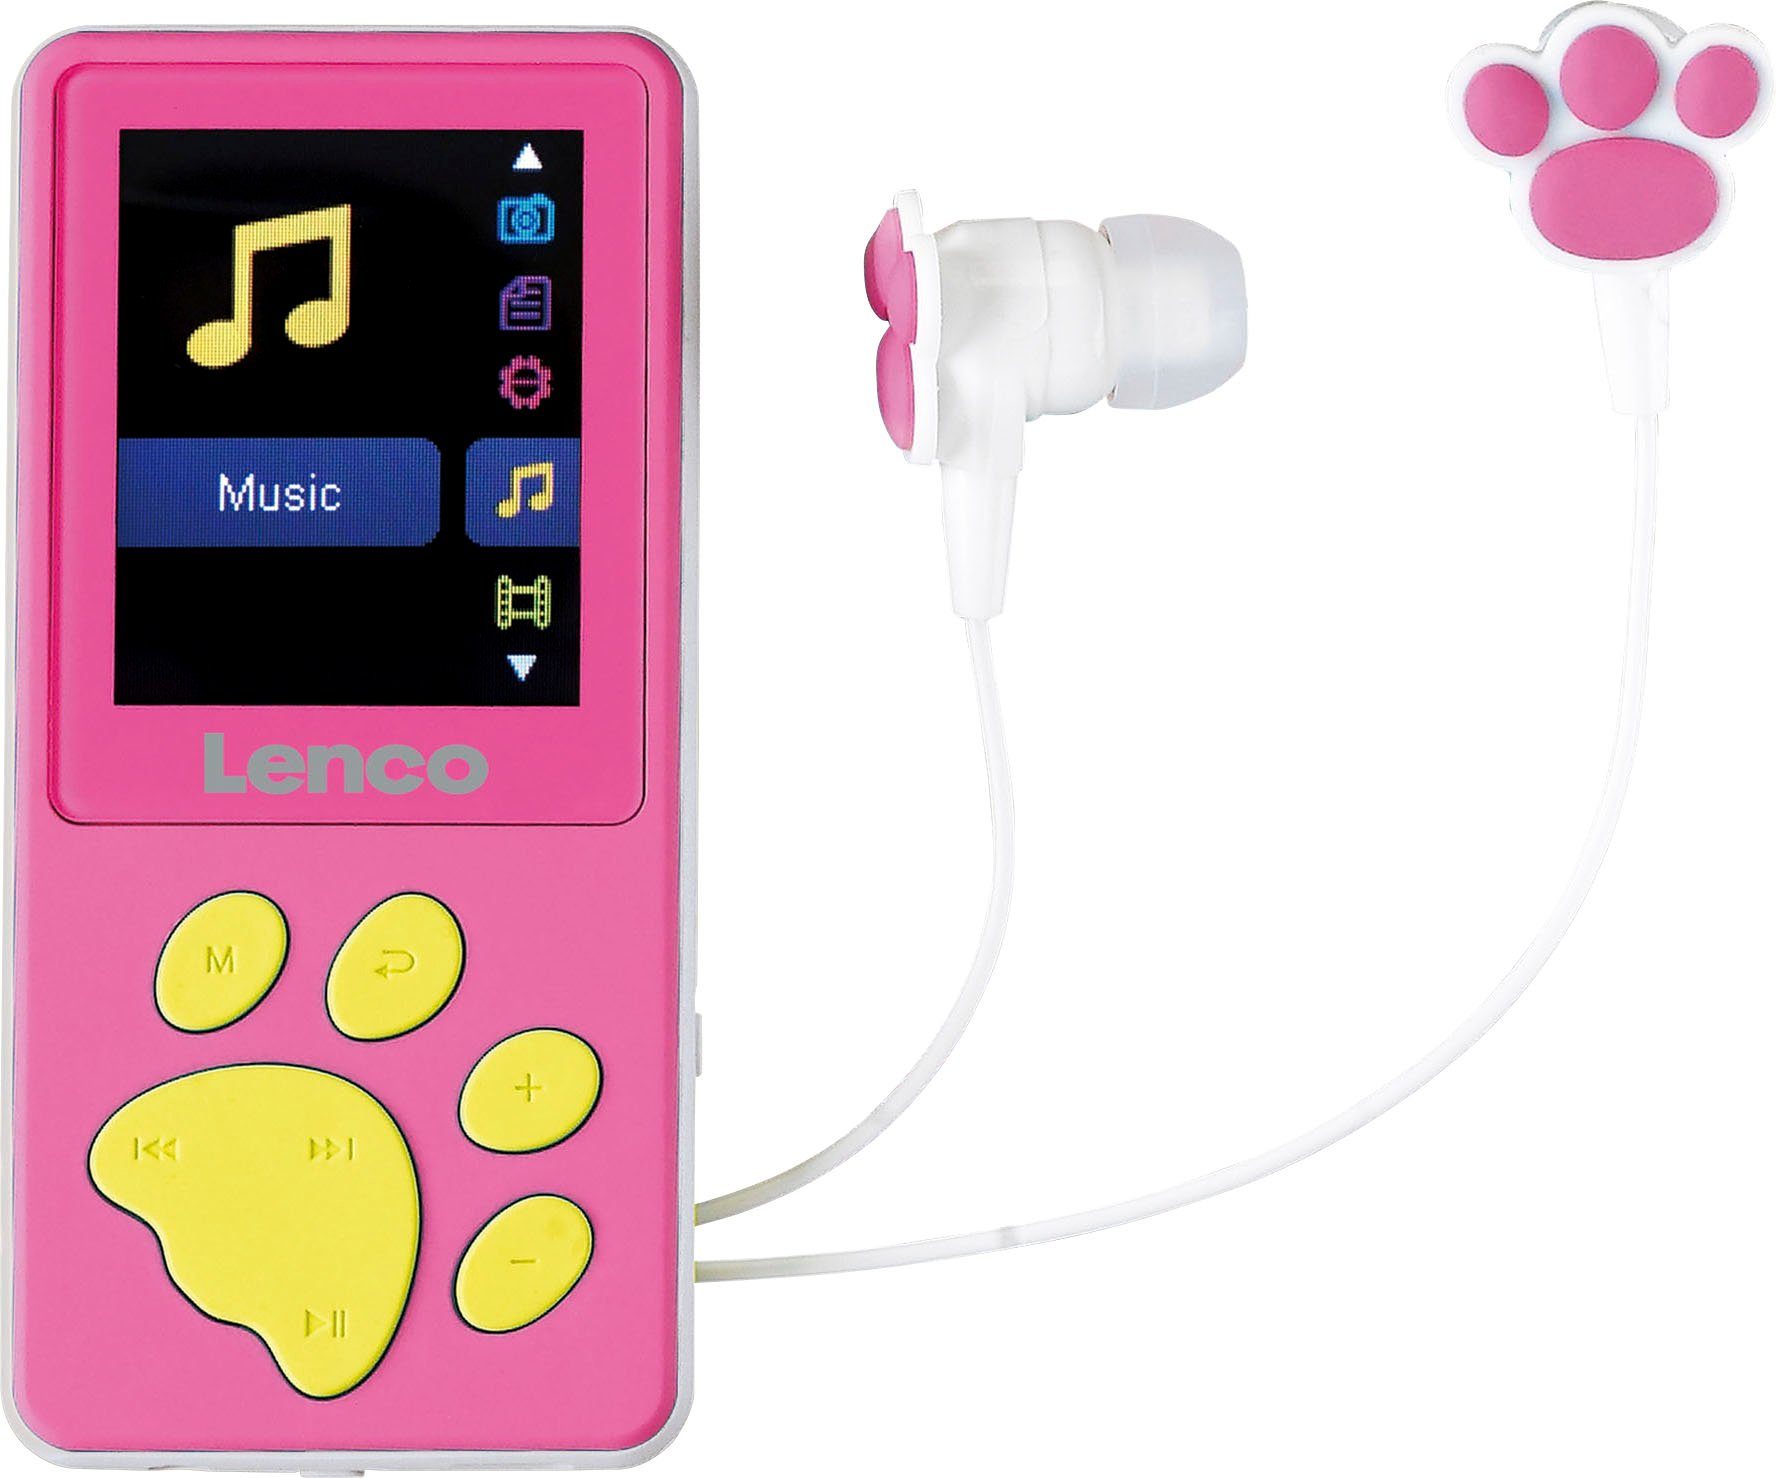 GB) MP3-Player MP4-Player Pink Xemio-560 Lenco (128